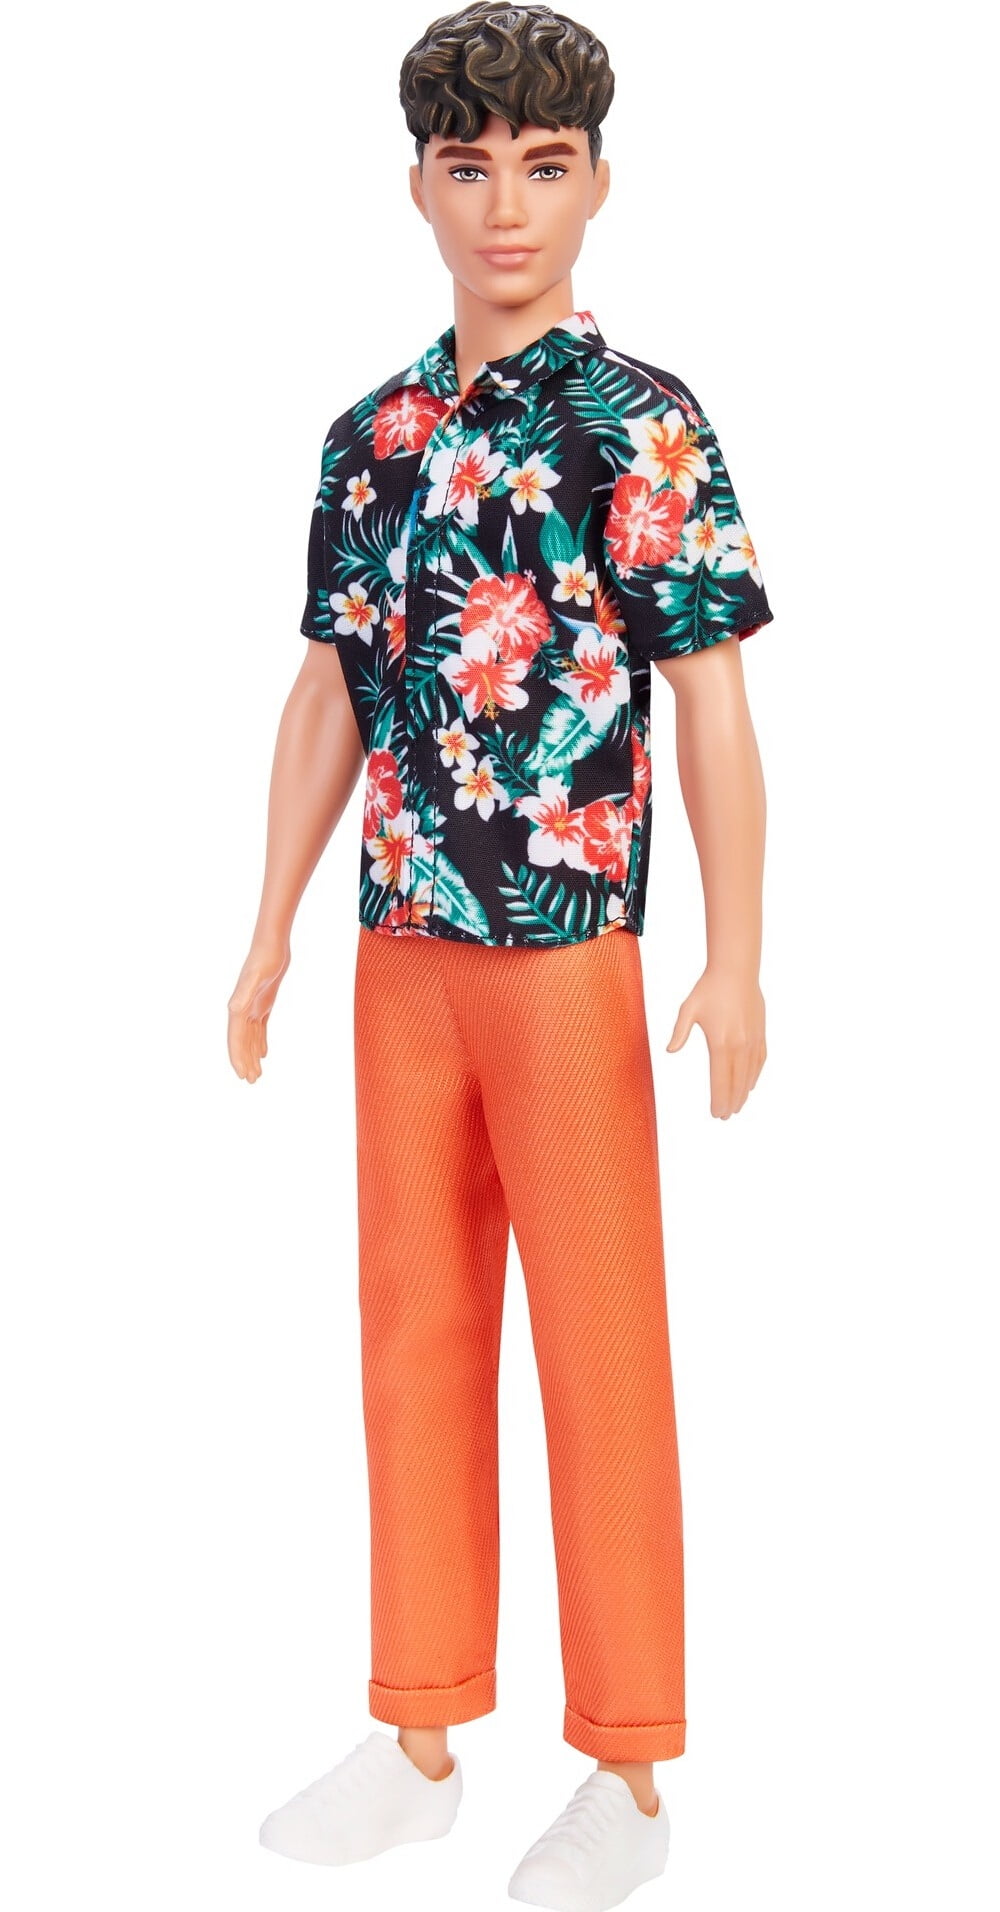 horizon Minister Kneden Barbie Ken Fashionistas Doll #184 with Brown Hair, Hawaiian Shirt and  Orange Pants - Walmart.com